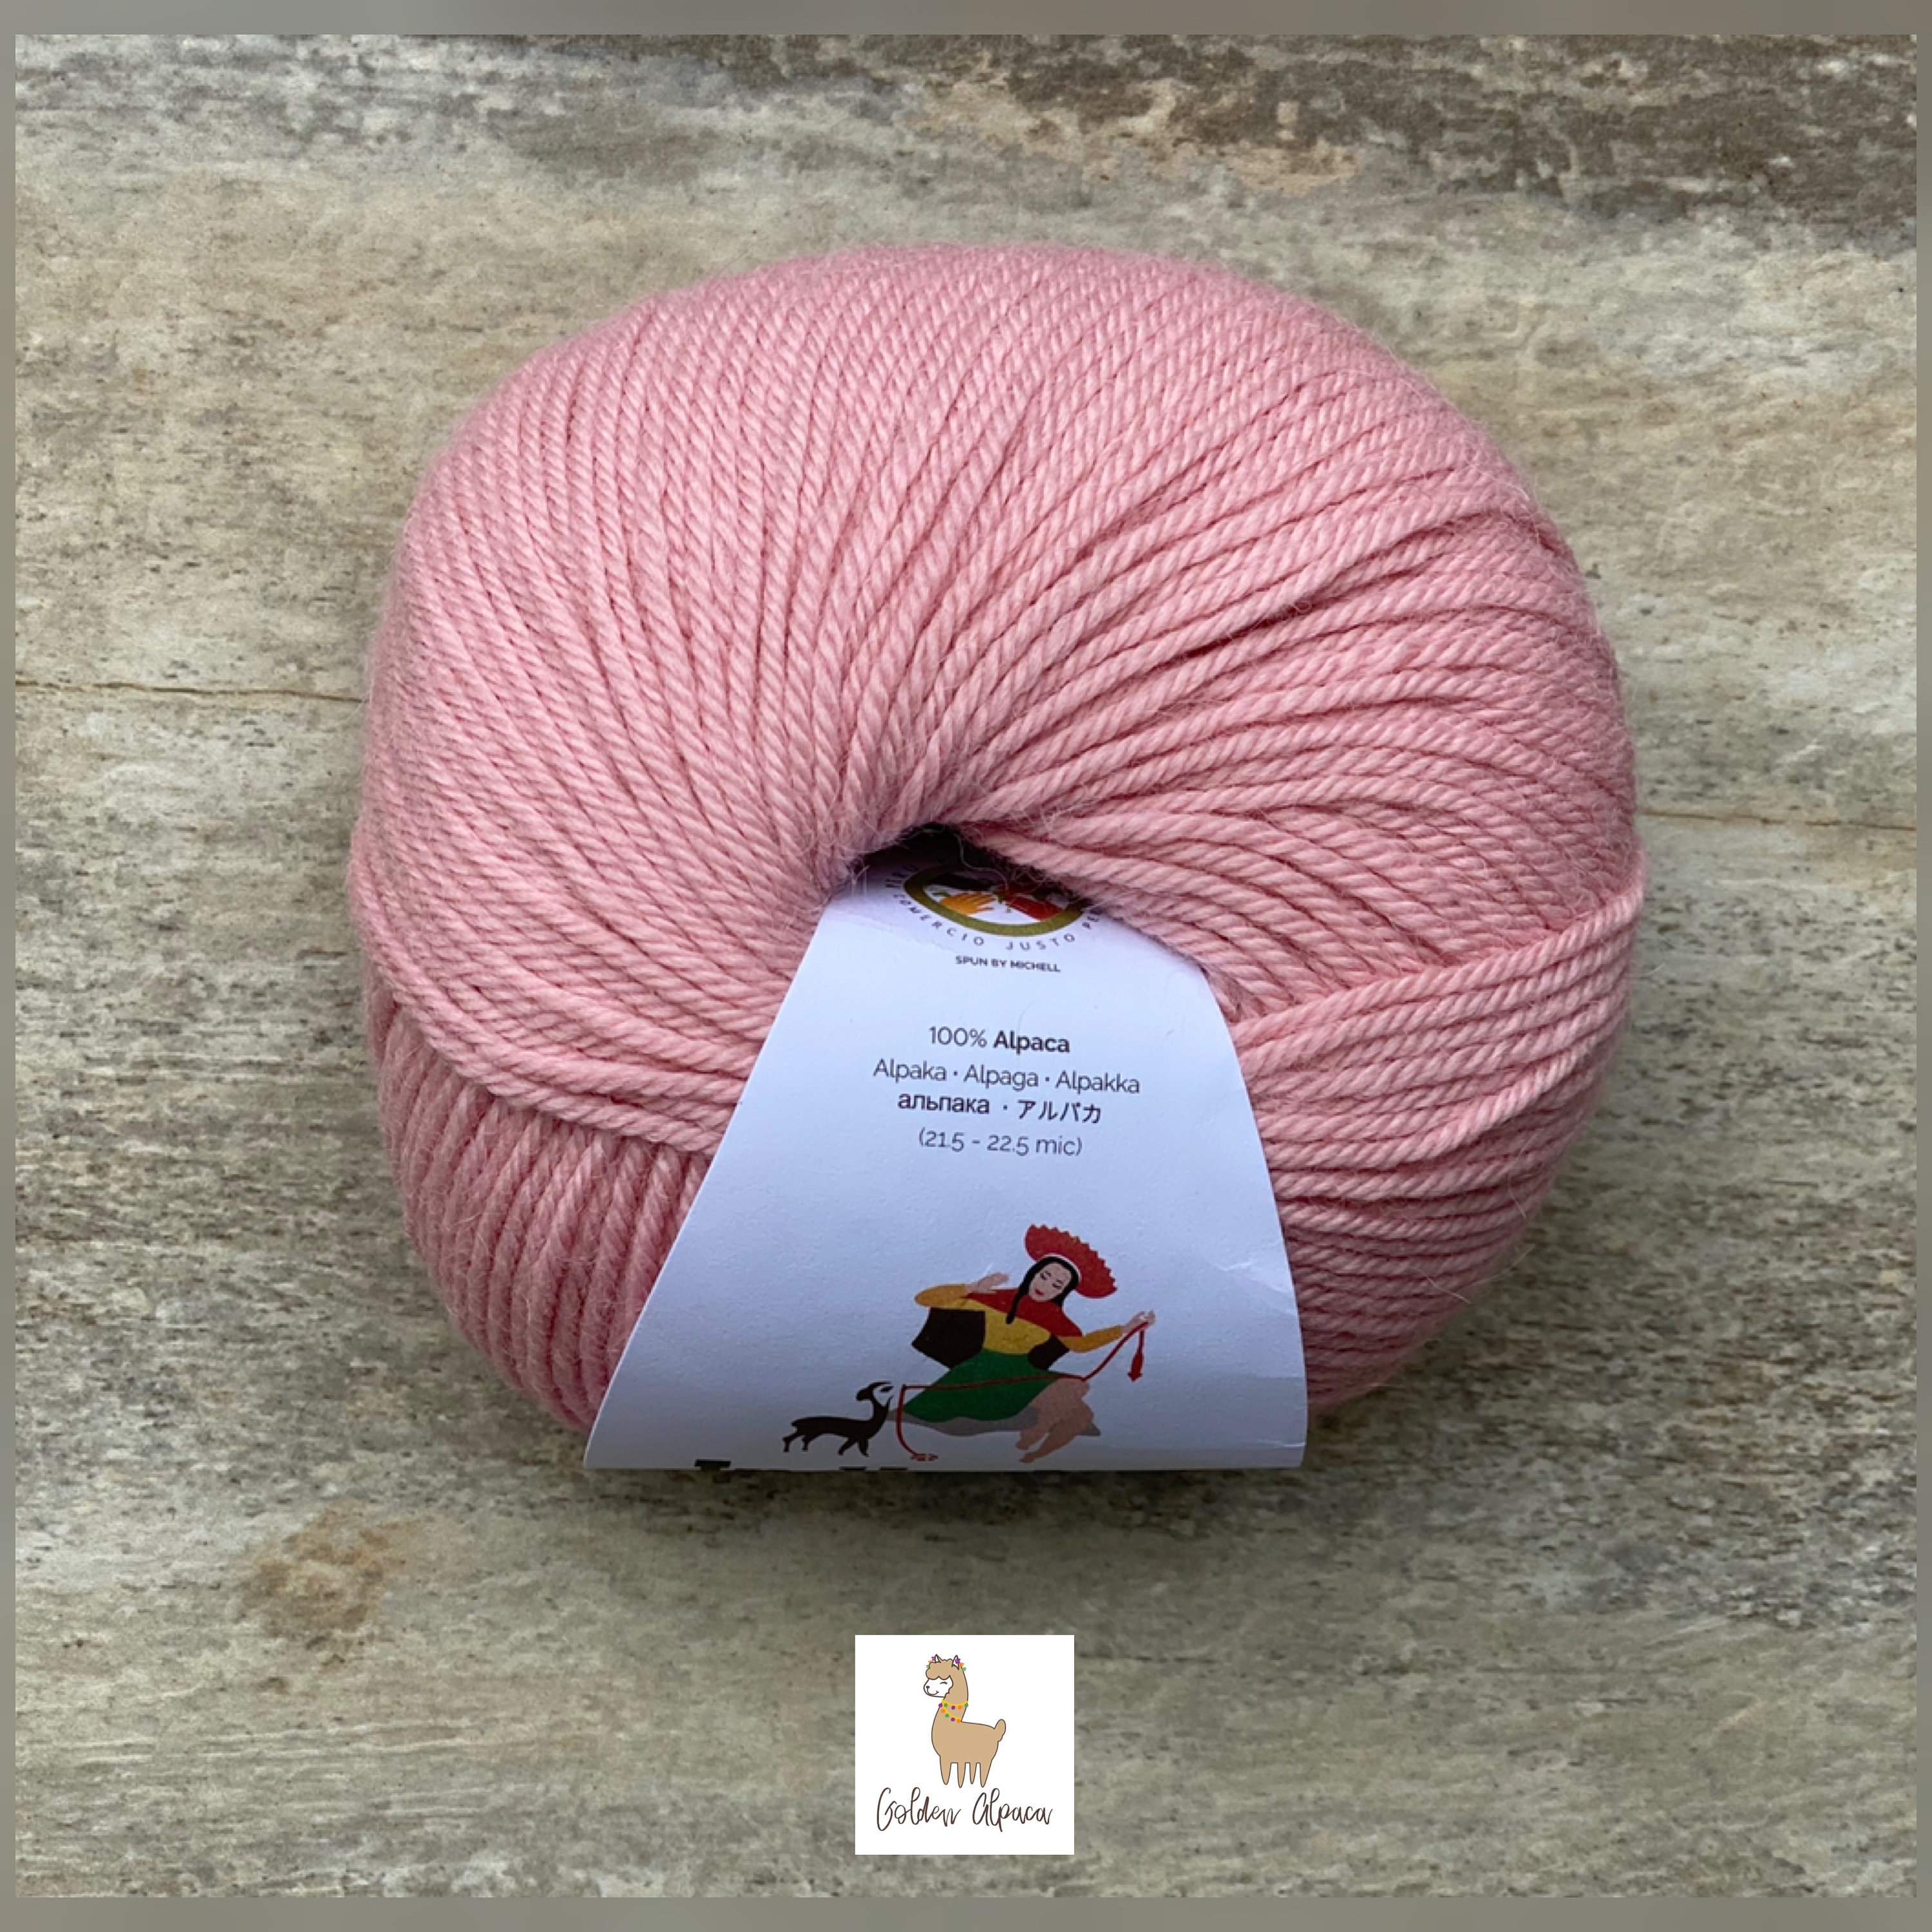 Pink Baby Alpaca Yarn From Peru for Crocheting or Knitting